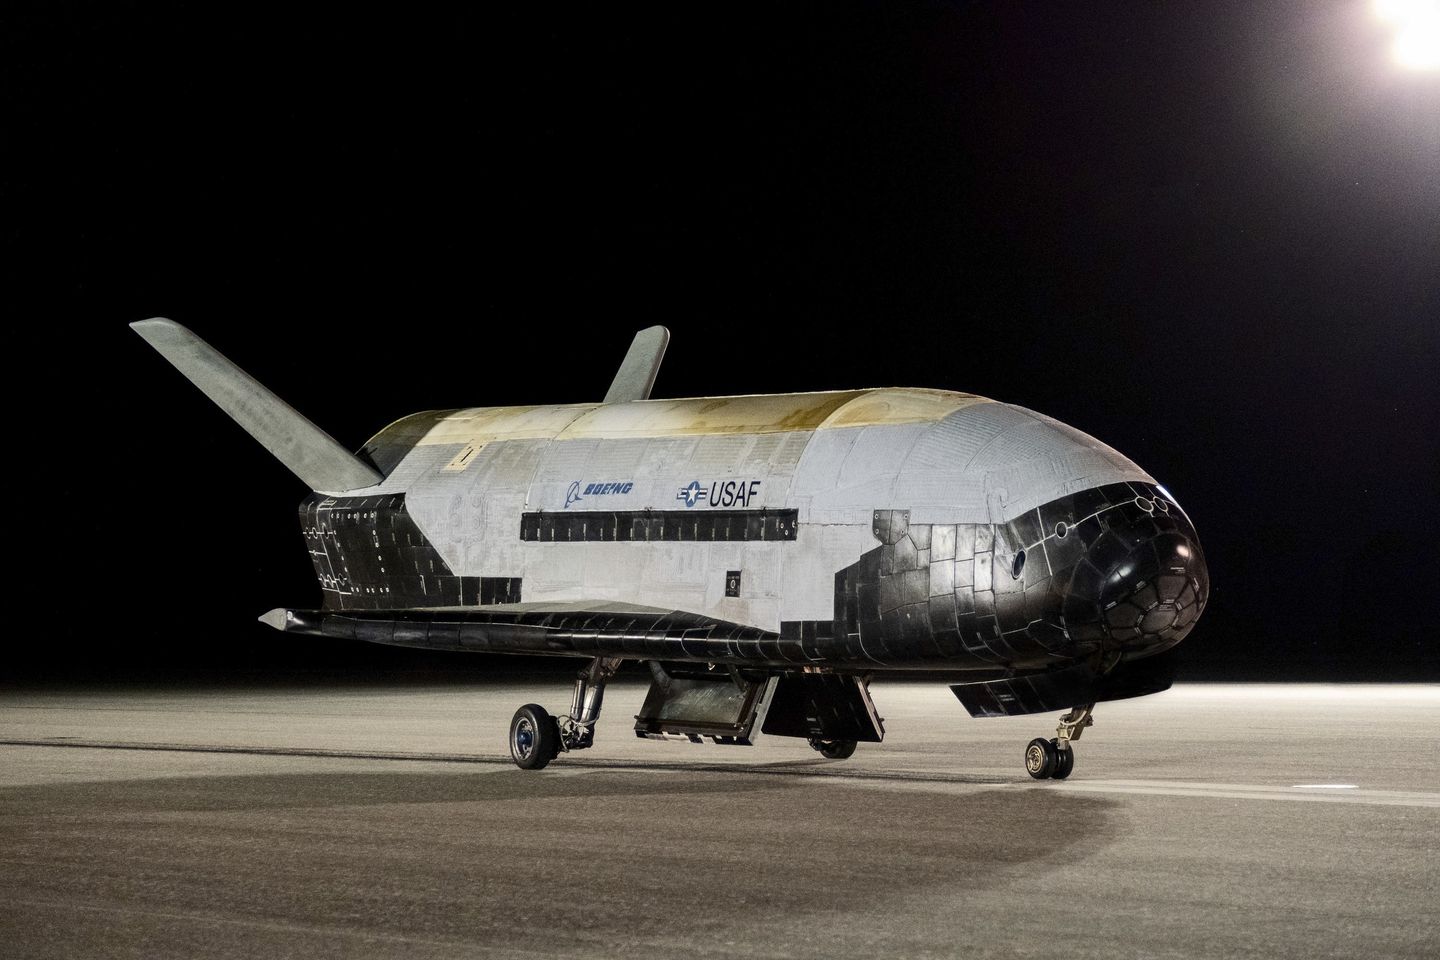 Pesawat ruang angkasa Boeing X-37B yang dapat digunakan kembali kembali ke Bumi setelah rekor 908 hari di orbit